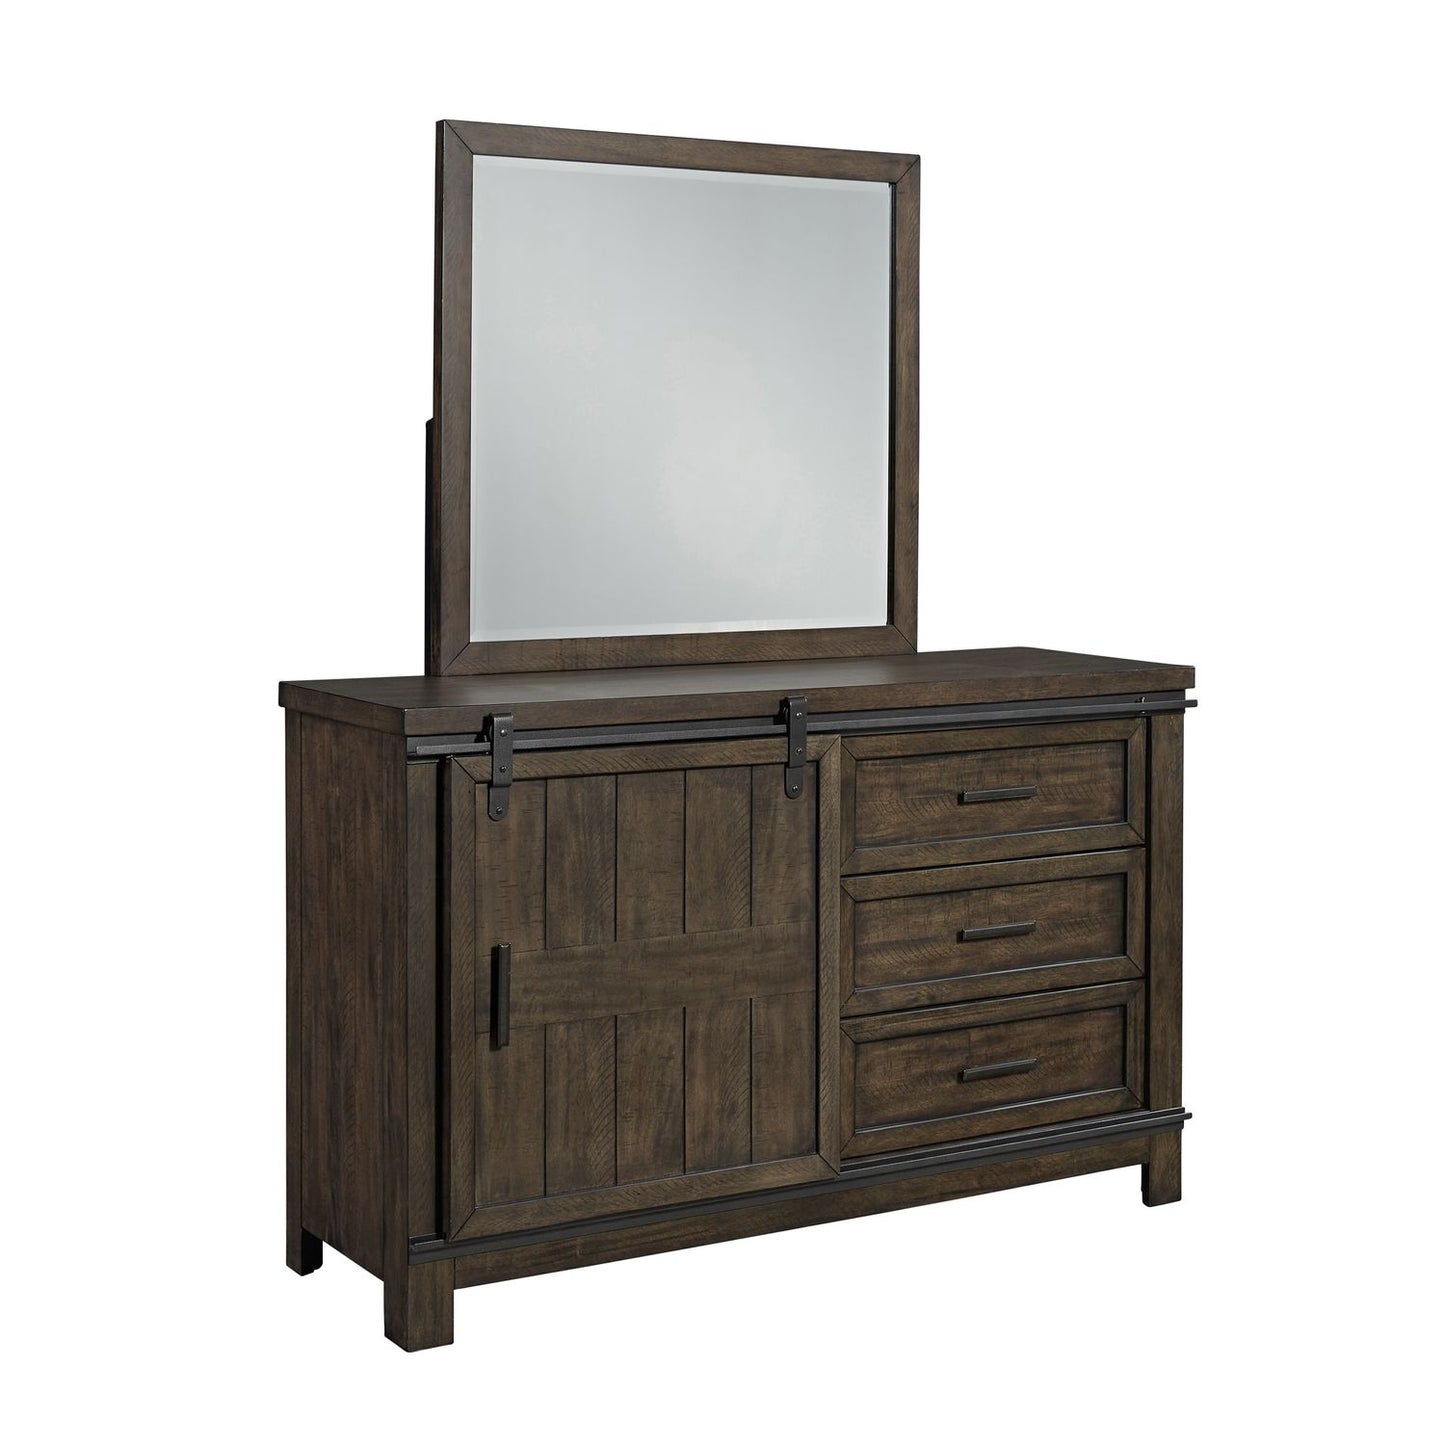 Thornwood Hills - Twin Panel Bed, Dresser & Mirror